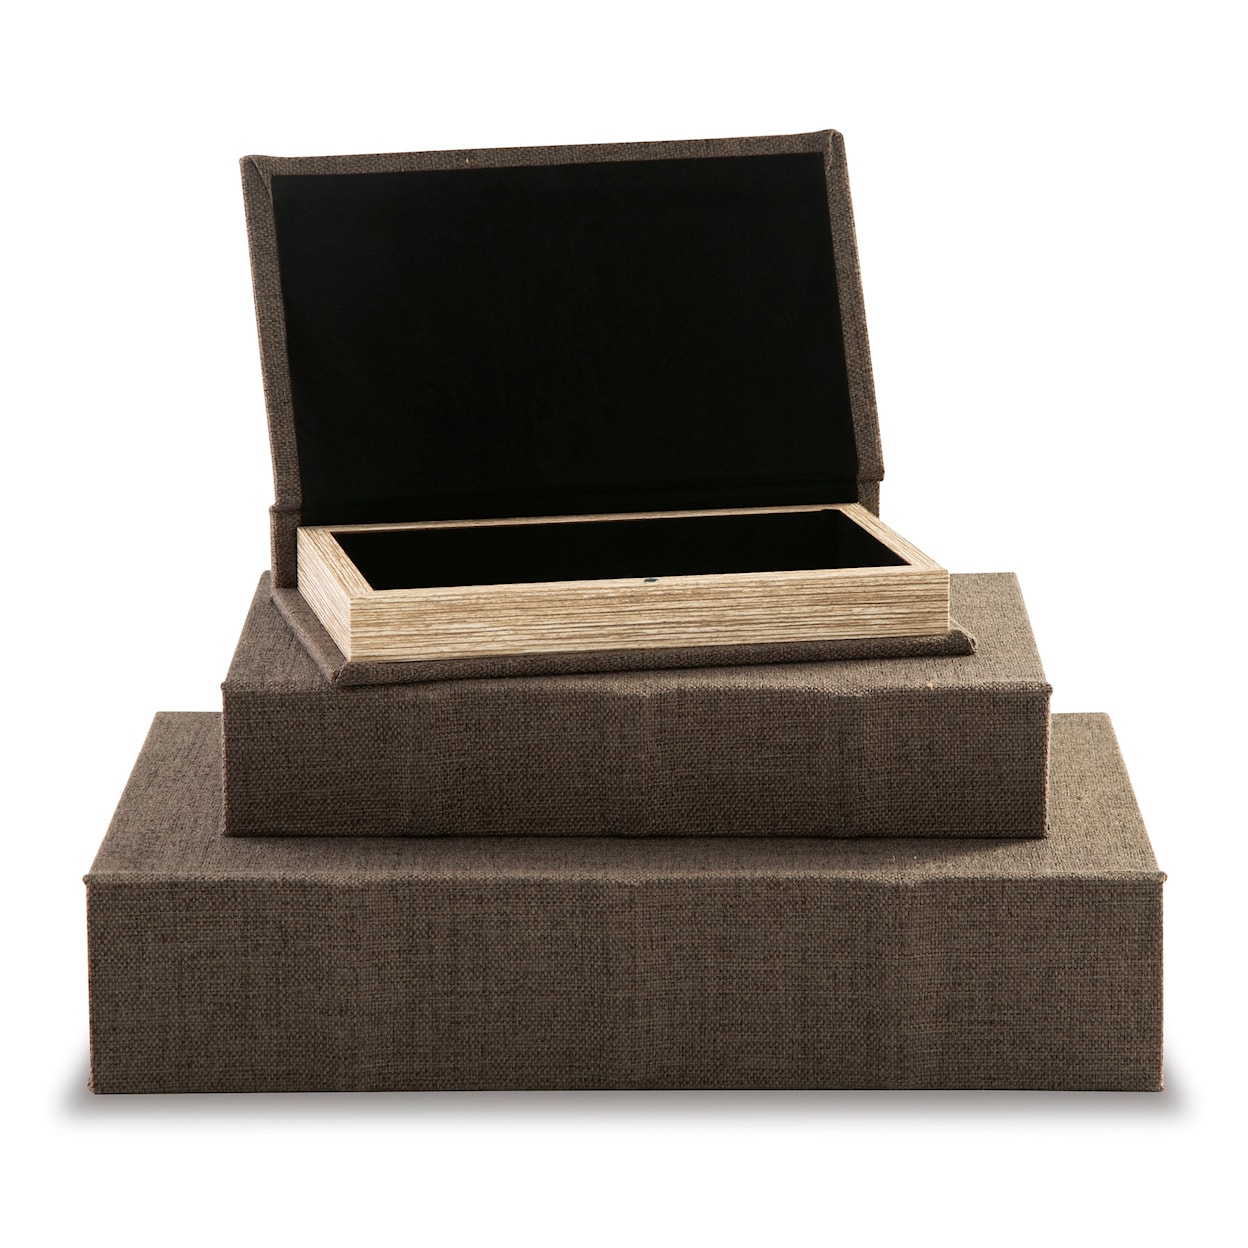 Ashley Furniture Signature Design Accents Jolina Box (Set of 3)